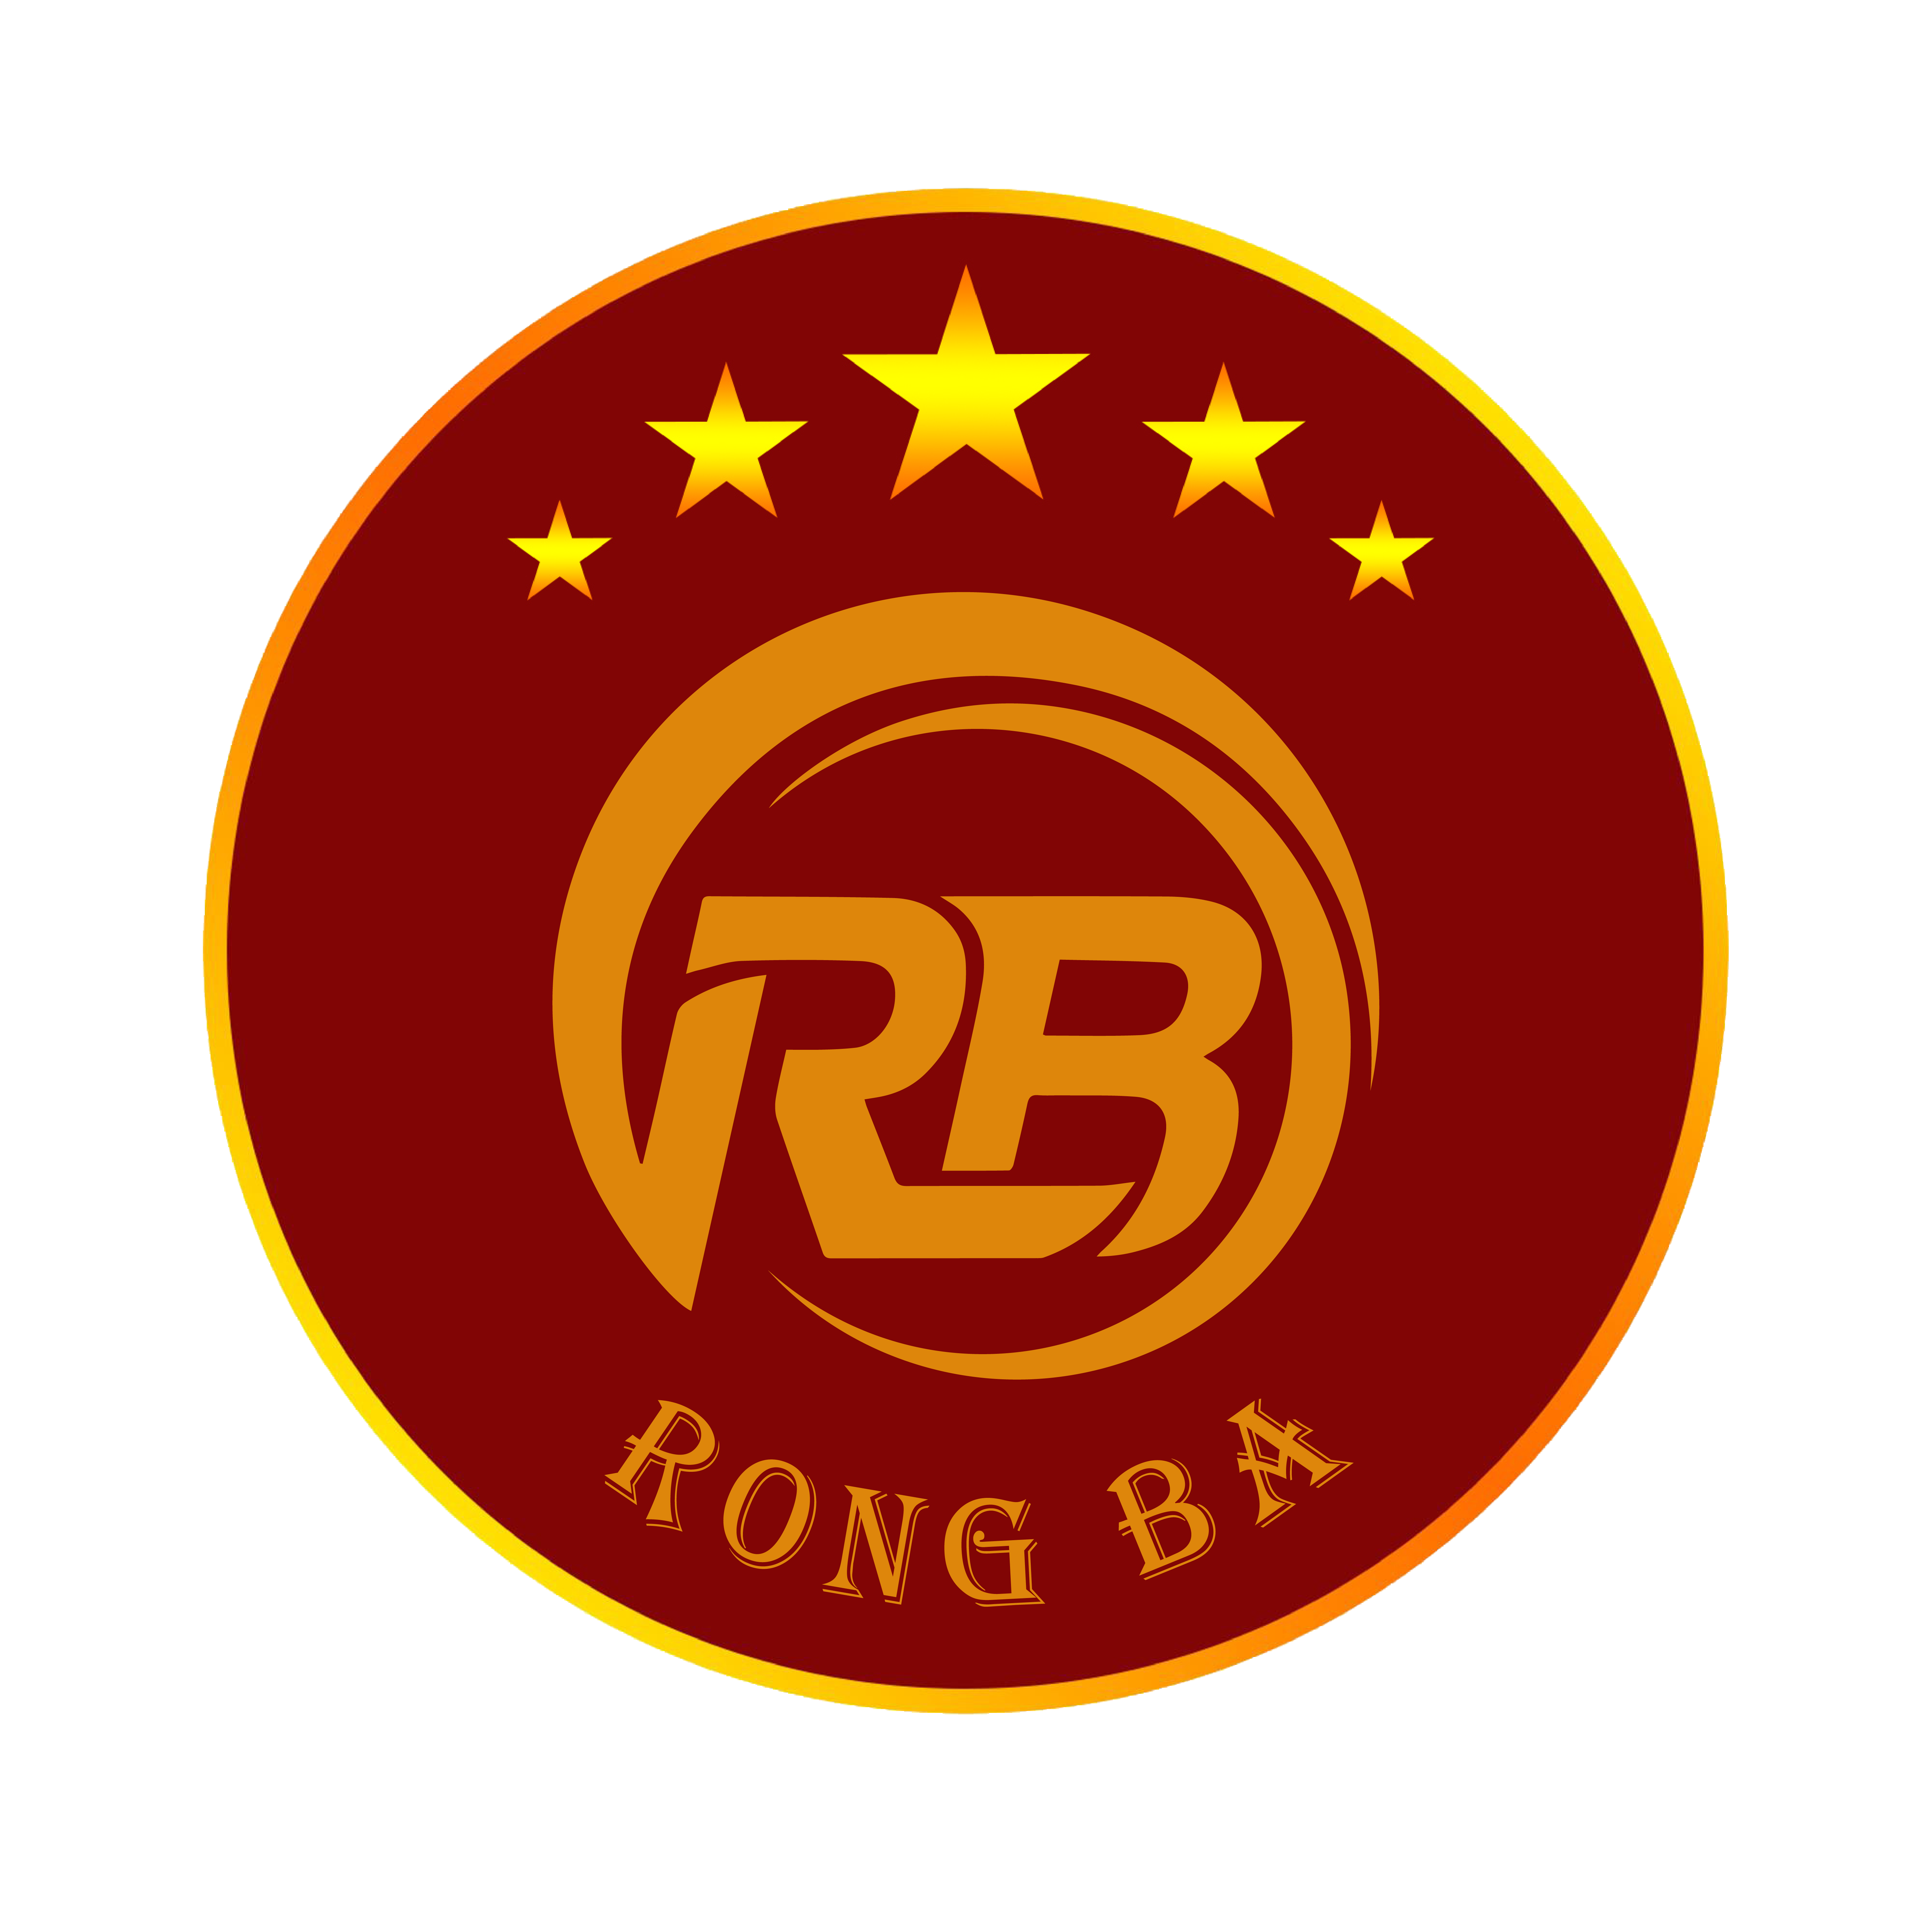 Rong Ba